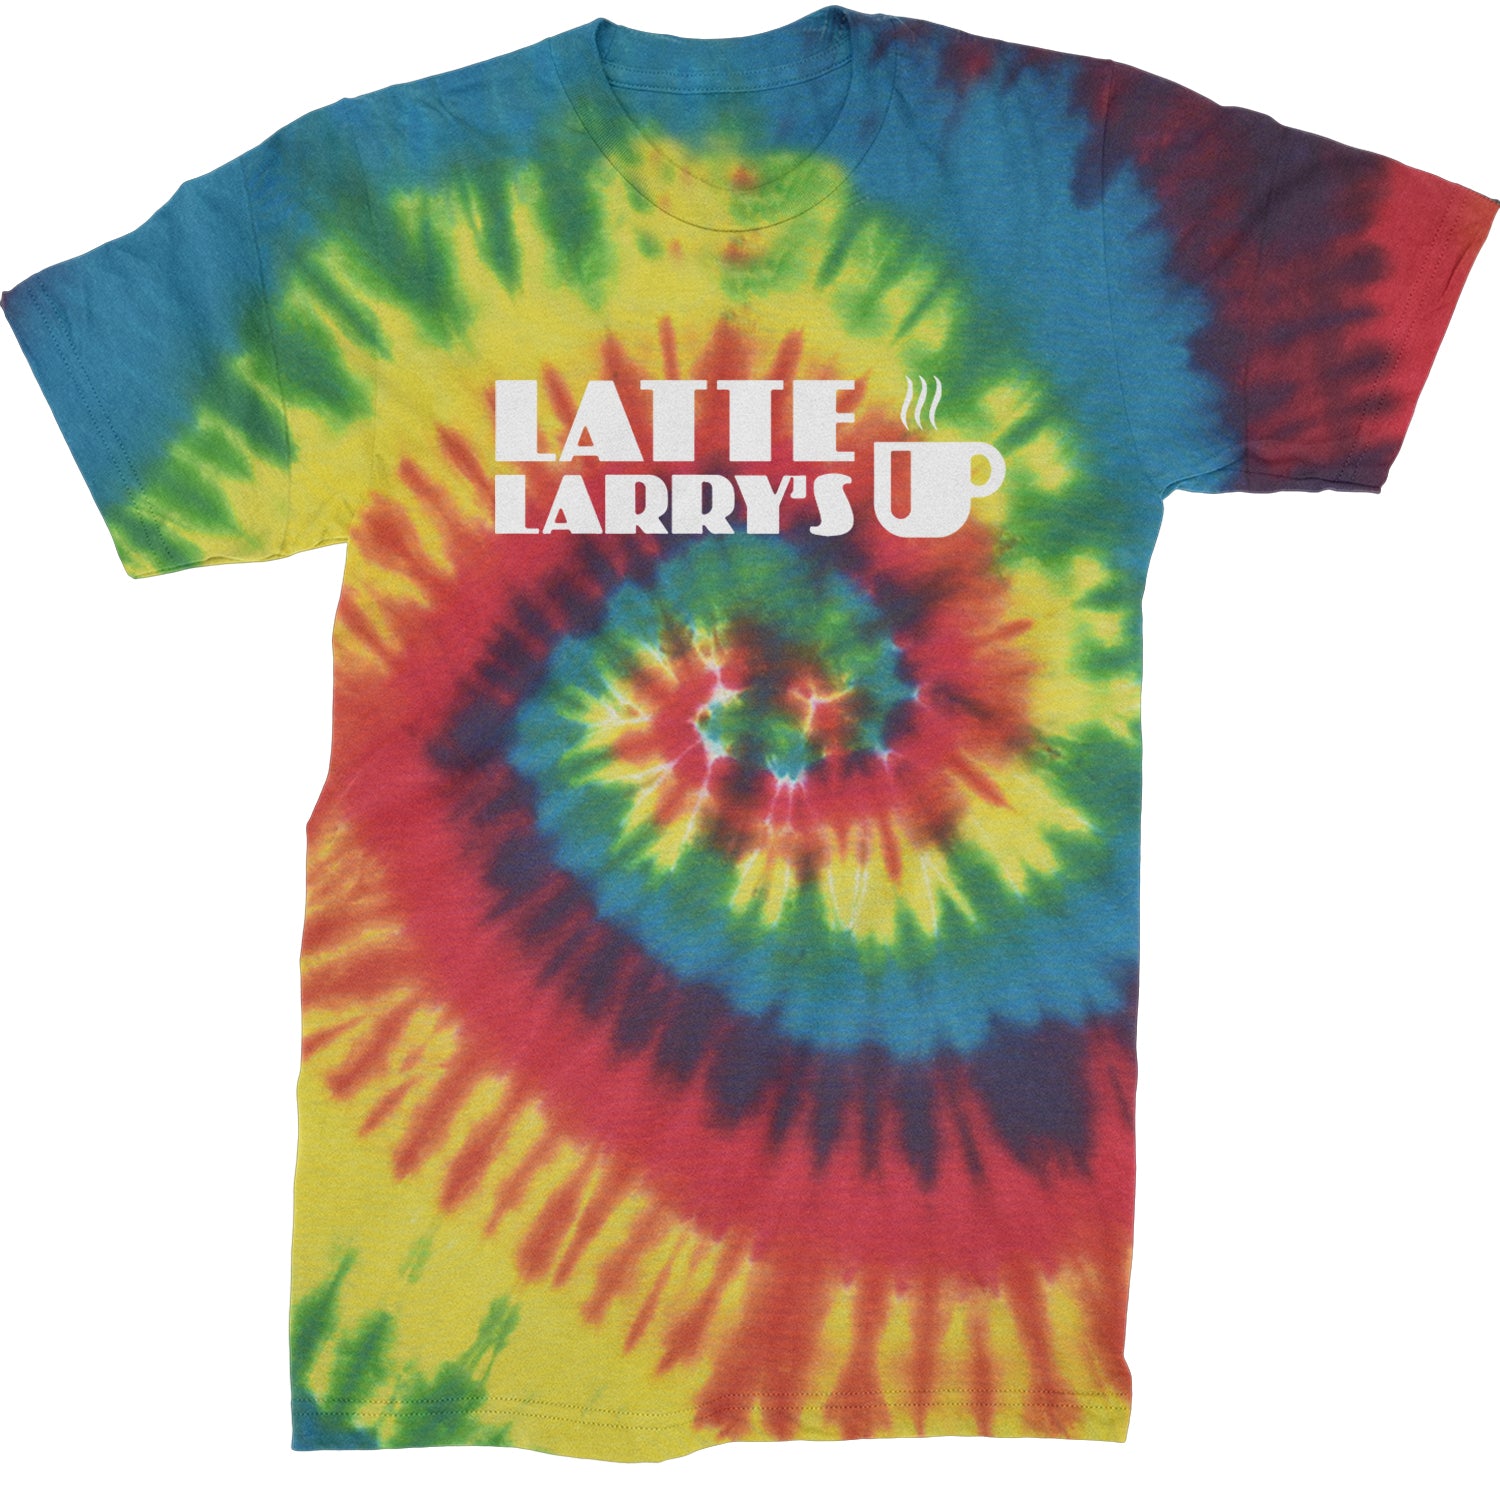 Latte Larry's Enthusiastic Coffee Mens T-shirt Tie-Dye Rainbow Reactive